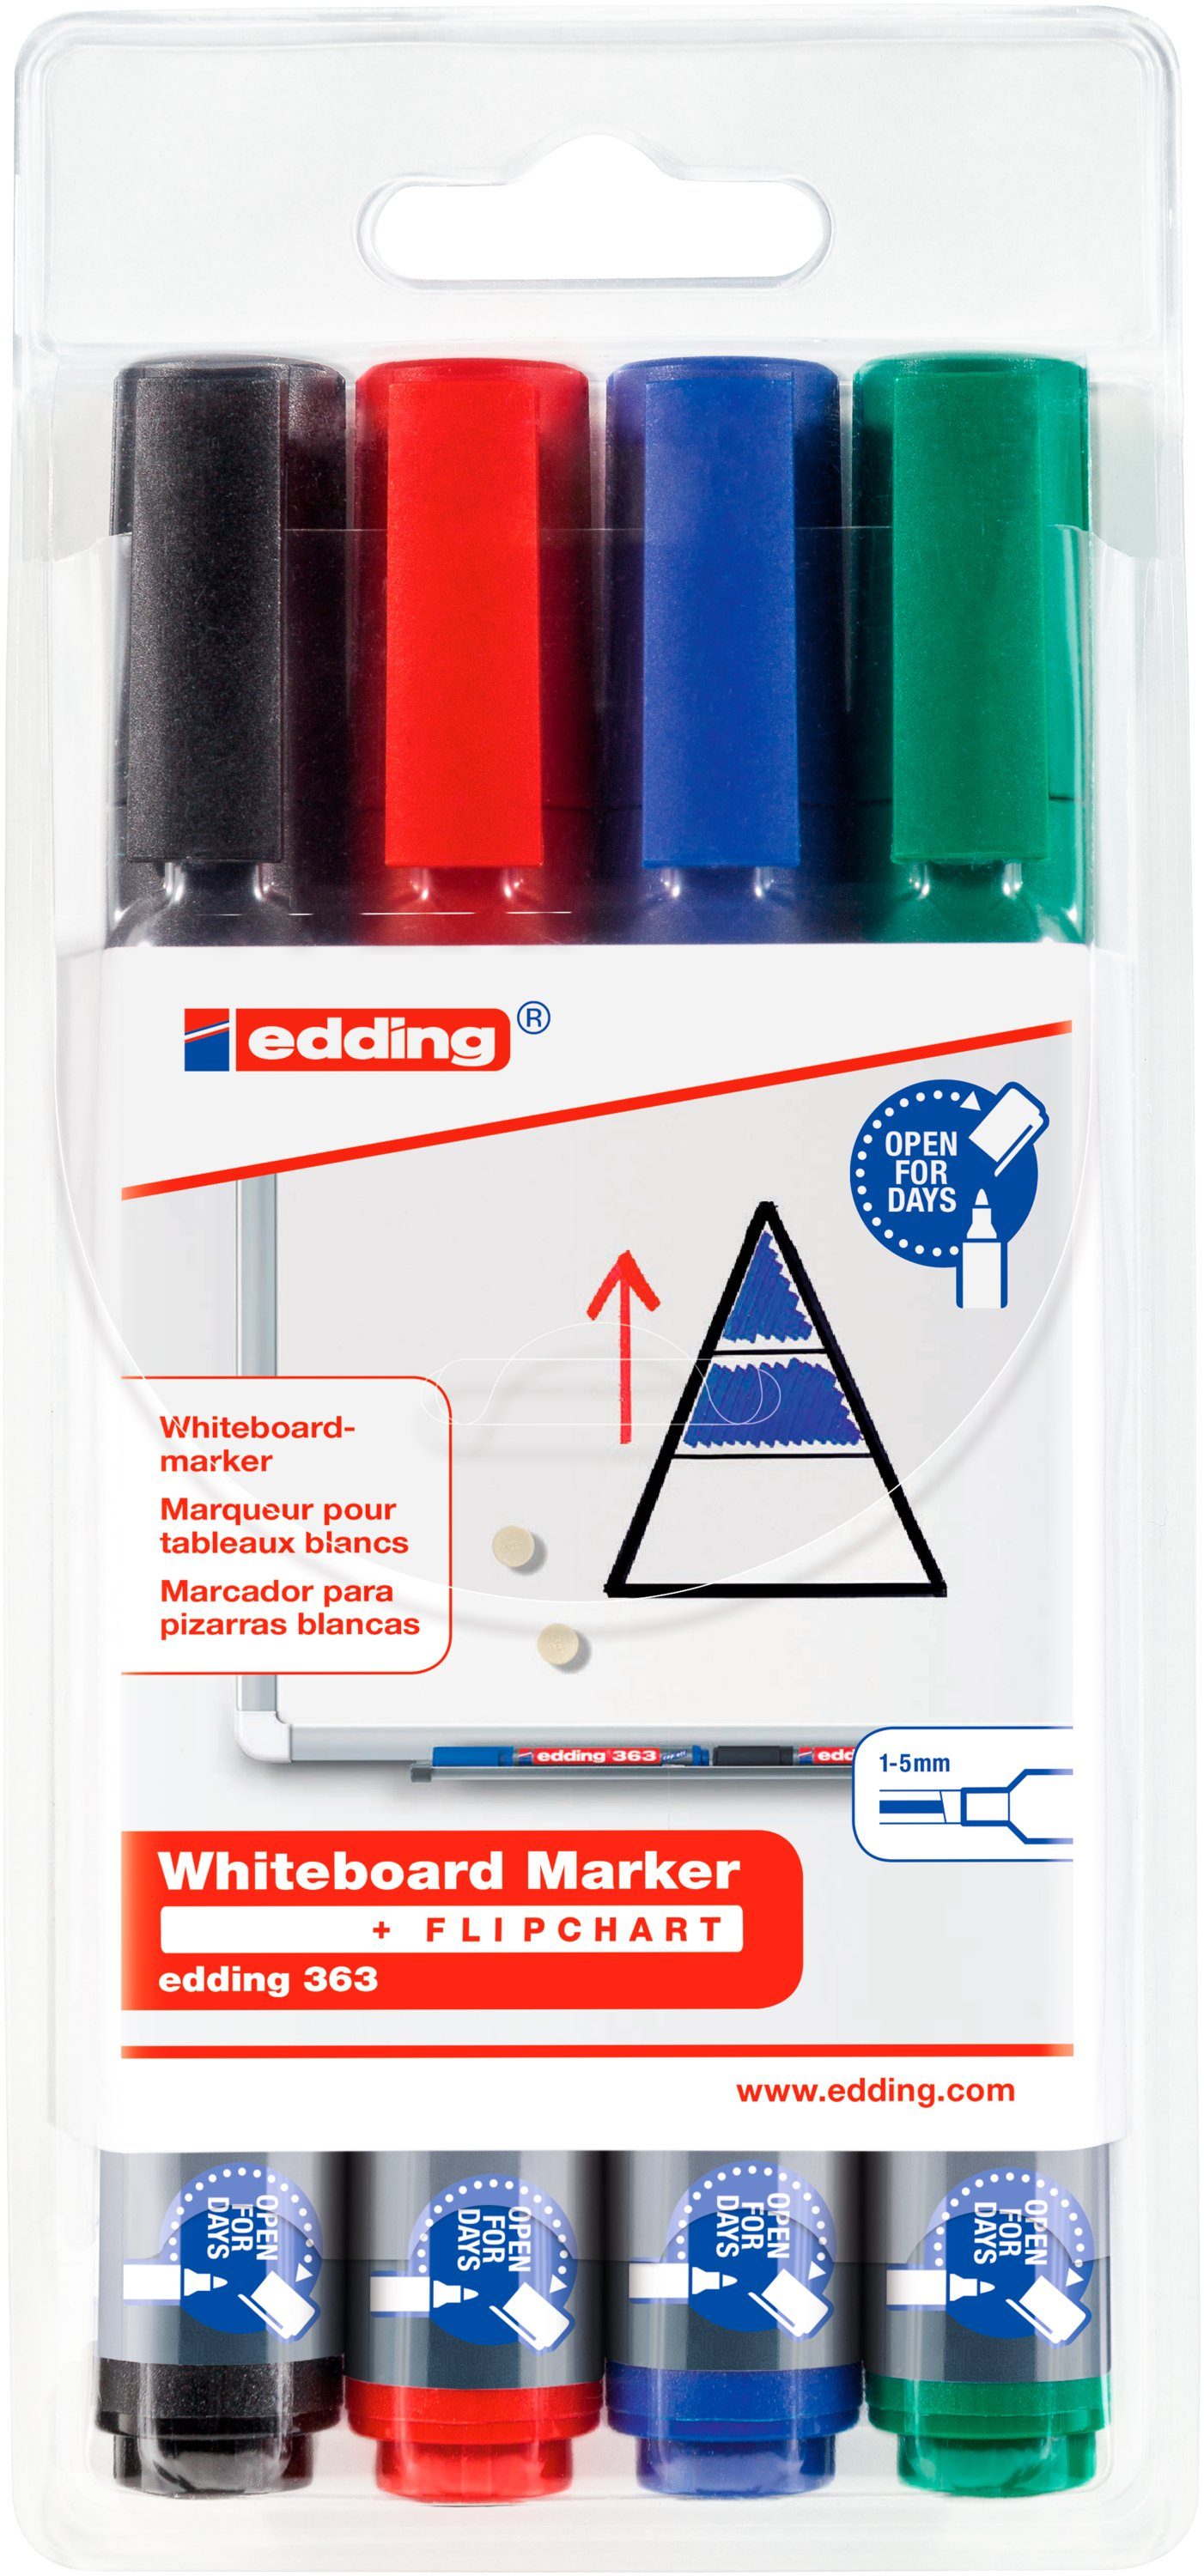 1 - Marker Keilspitze, 4er-Set Whiteboard 363 mm edding 5 Marker mm